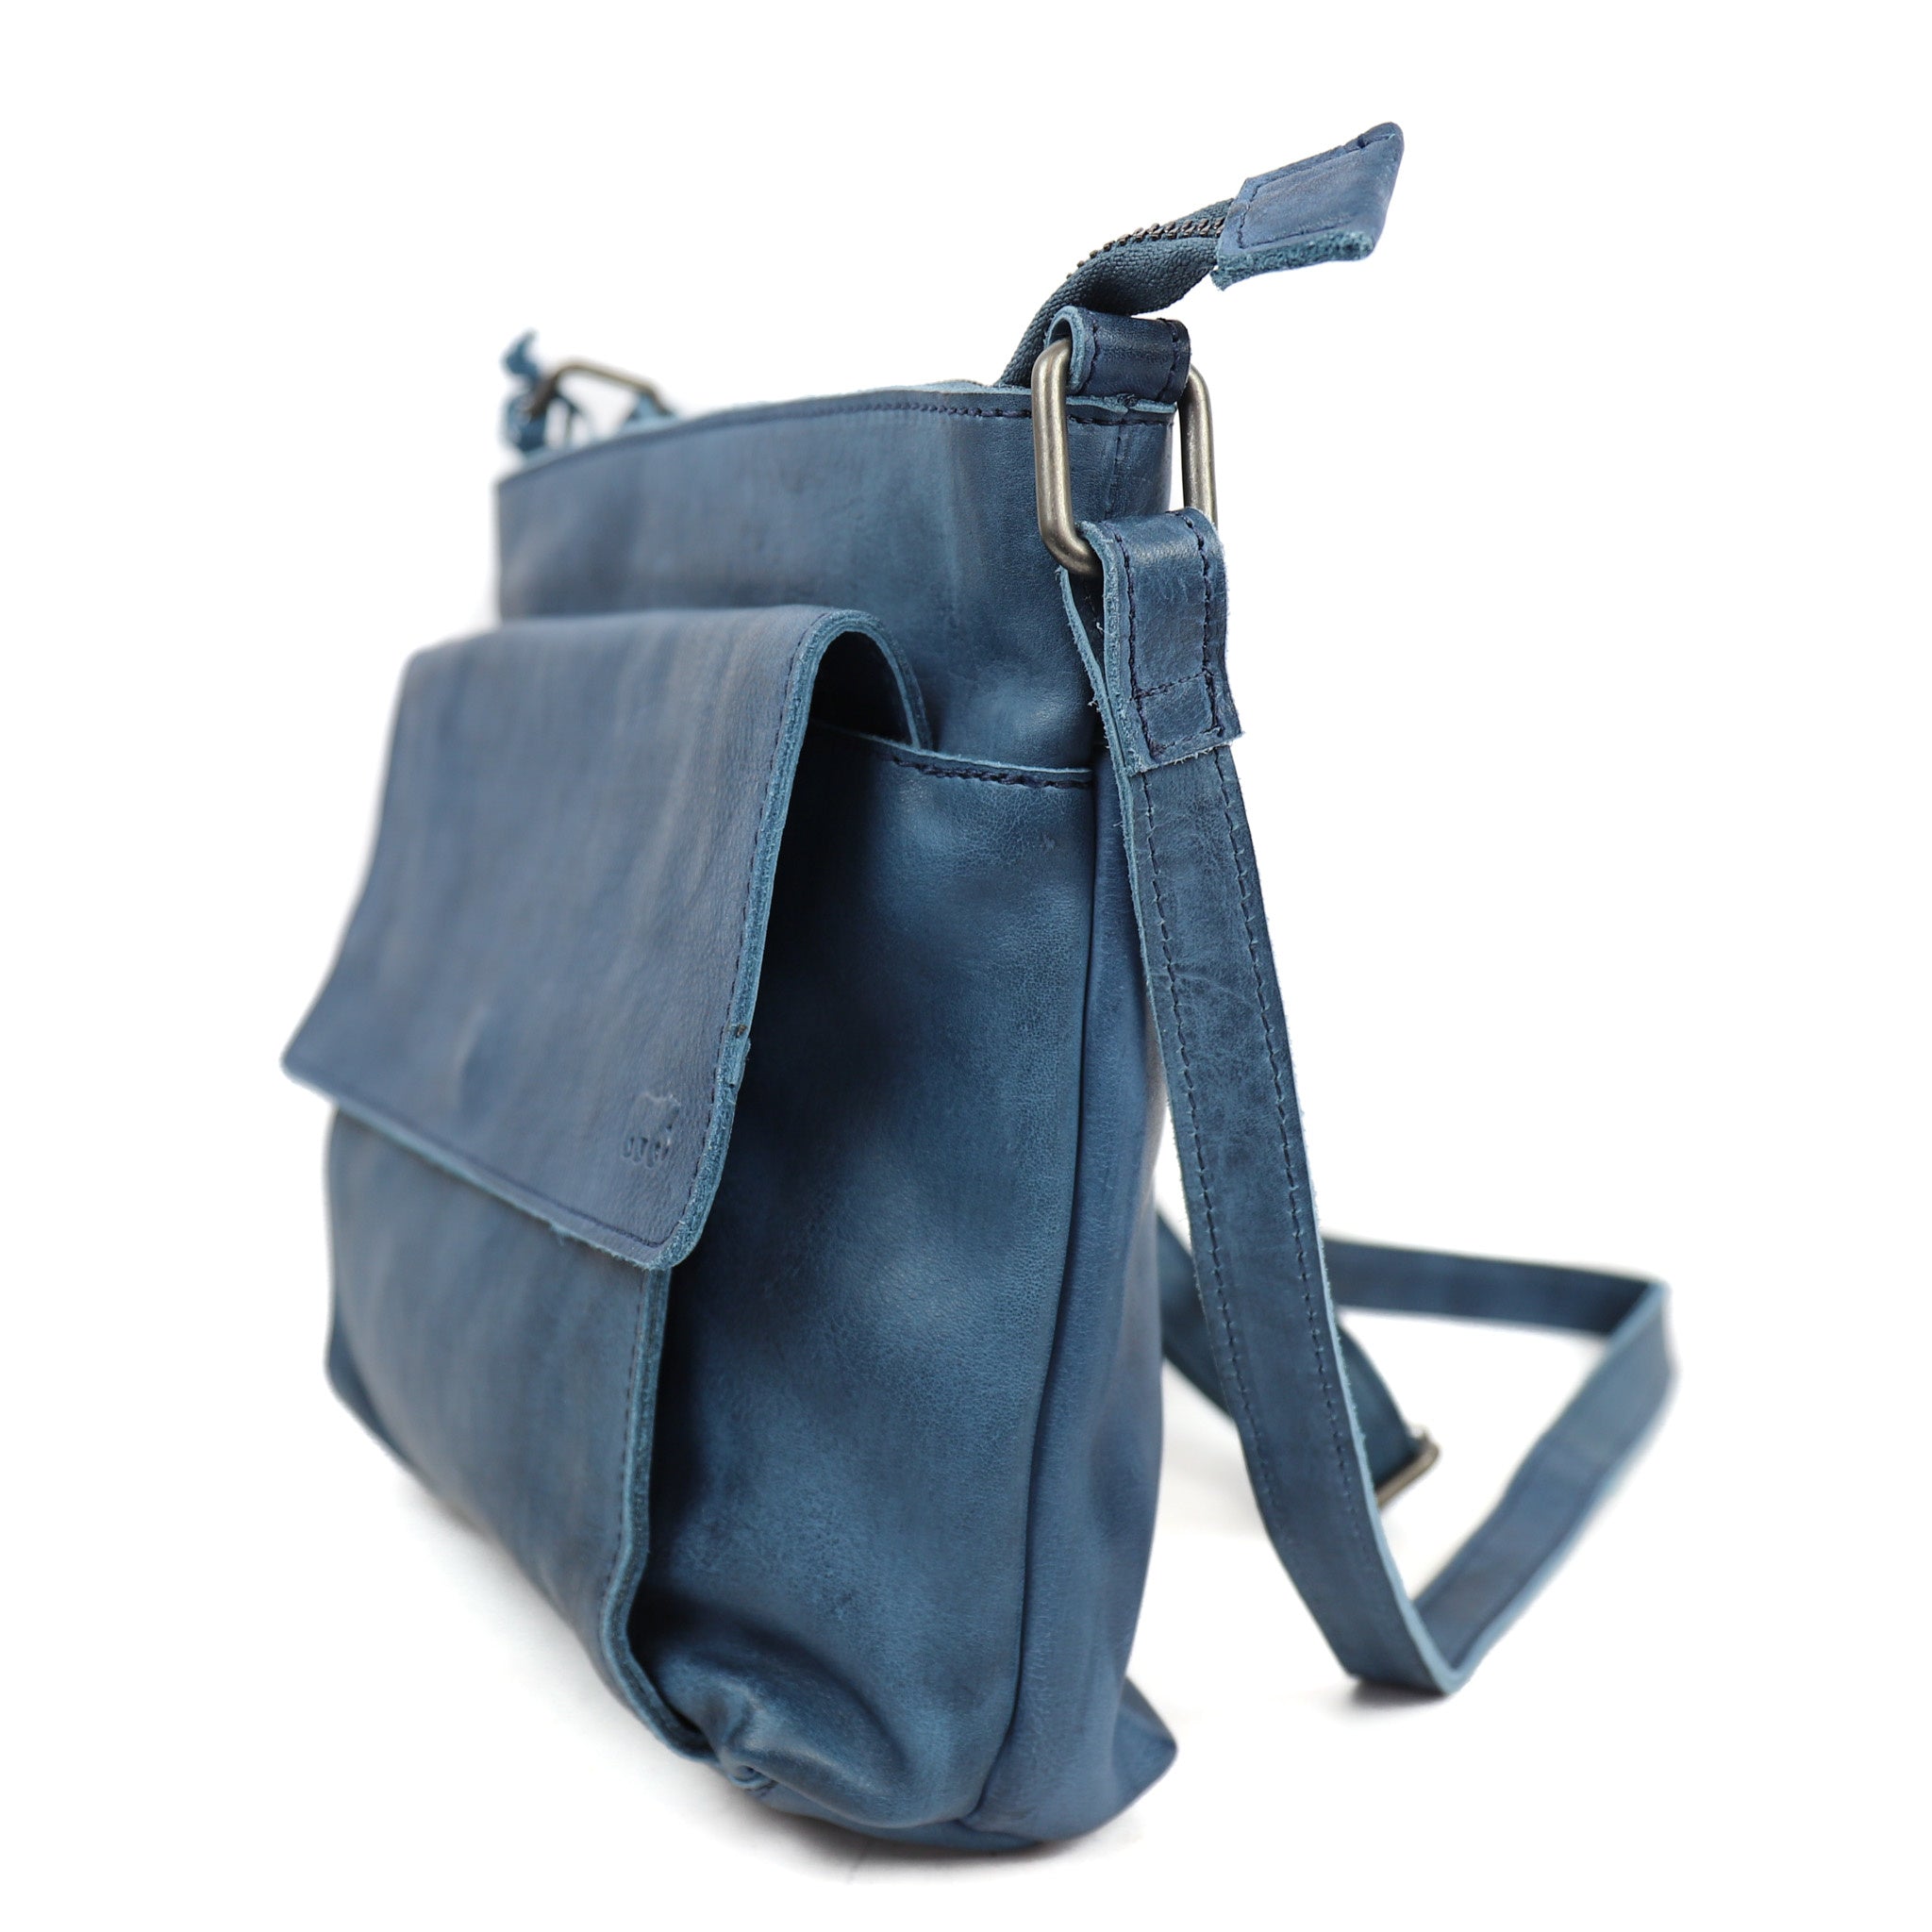 Shoulder bag 'Rai' turquoise - CP 6007